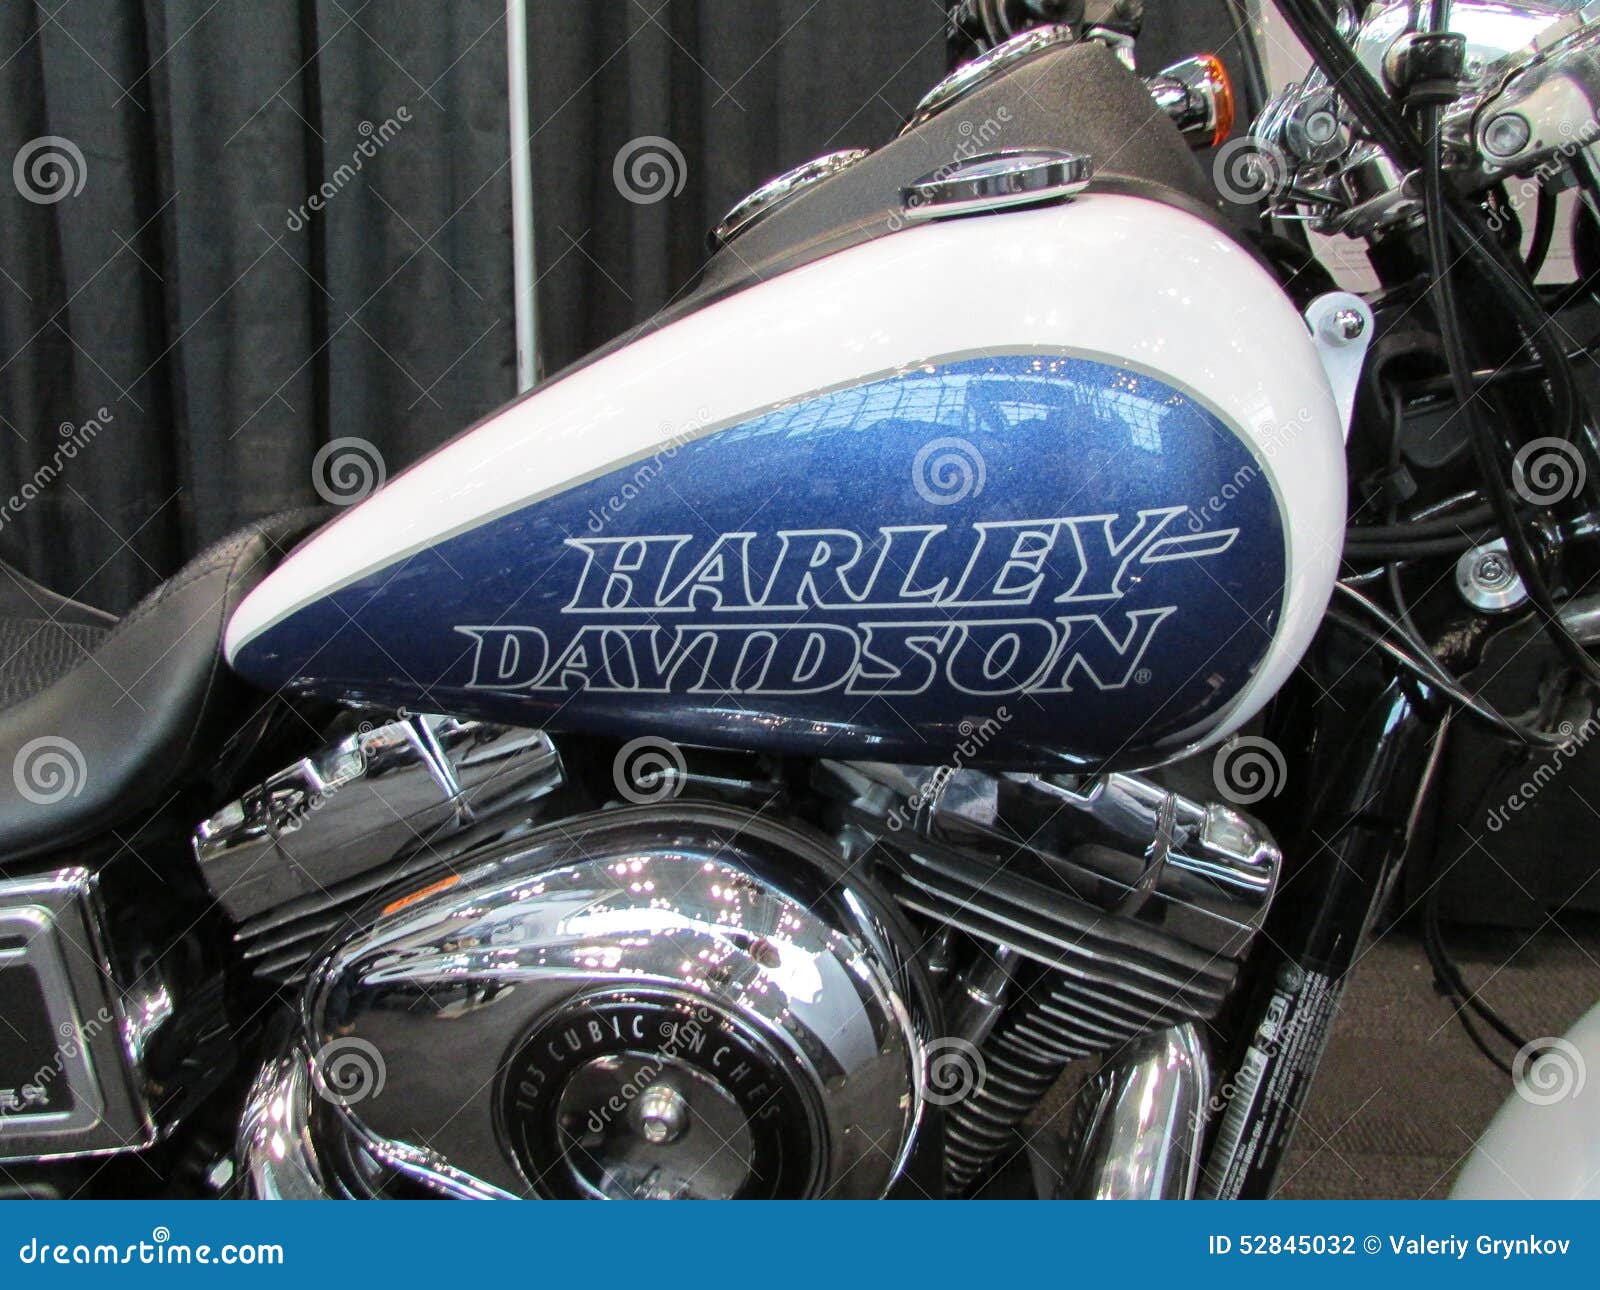 Bike. Harley Davidson Gas Tank and Engine. 2015 New York International ...